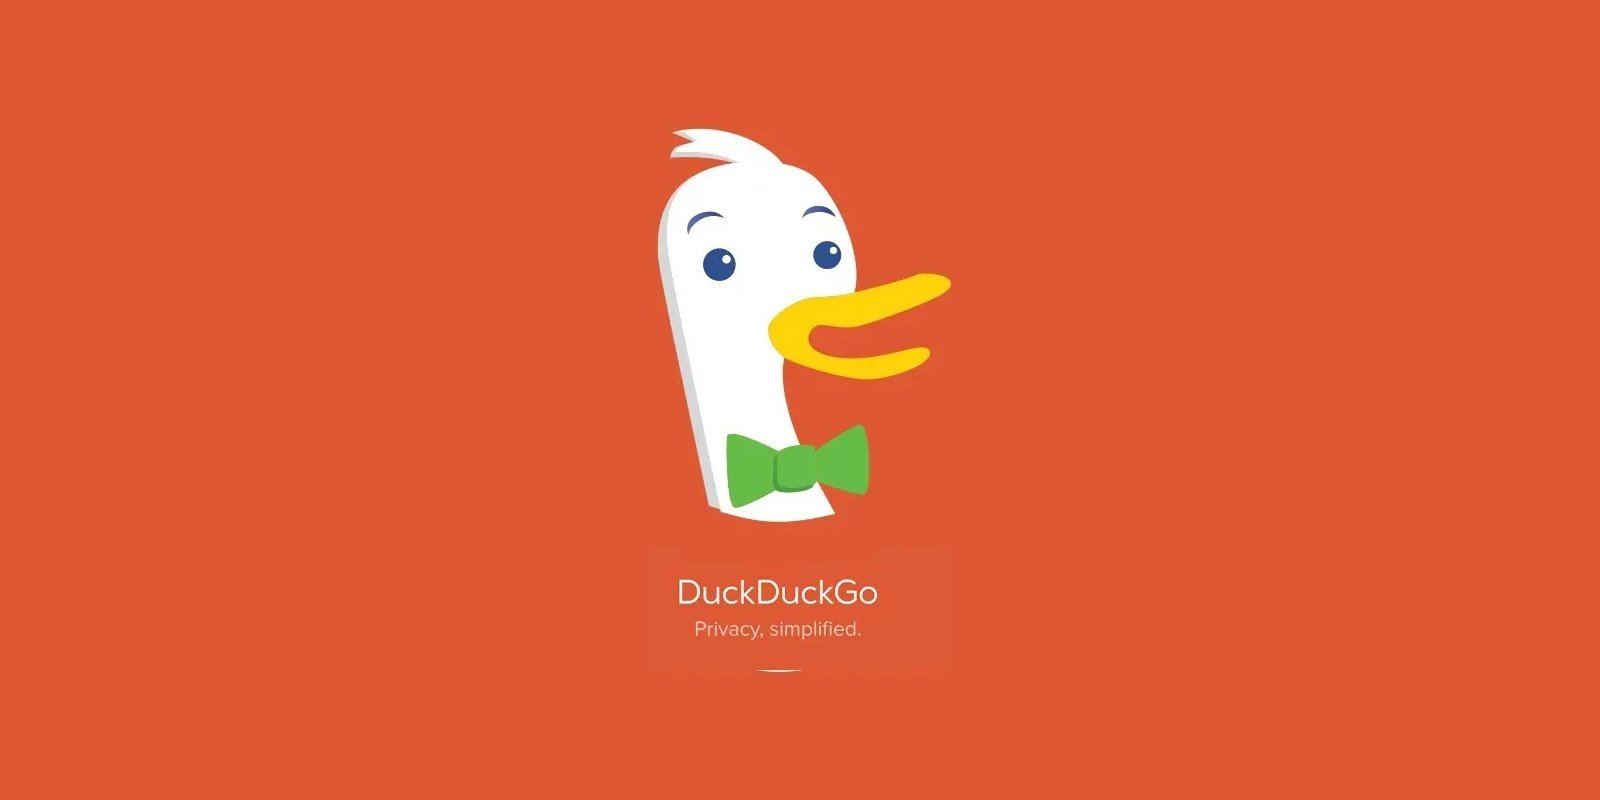 Privateness-focused search engine DuckDuckGo grew by 46% in 2021